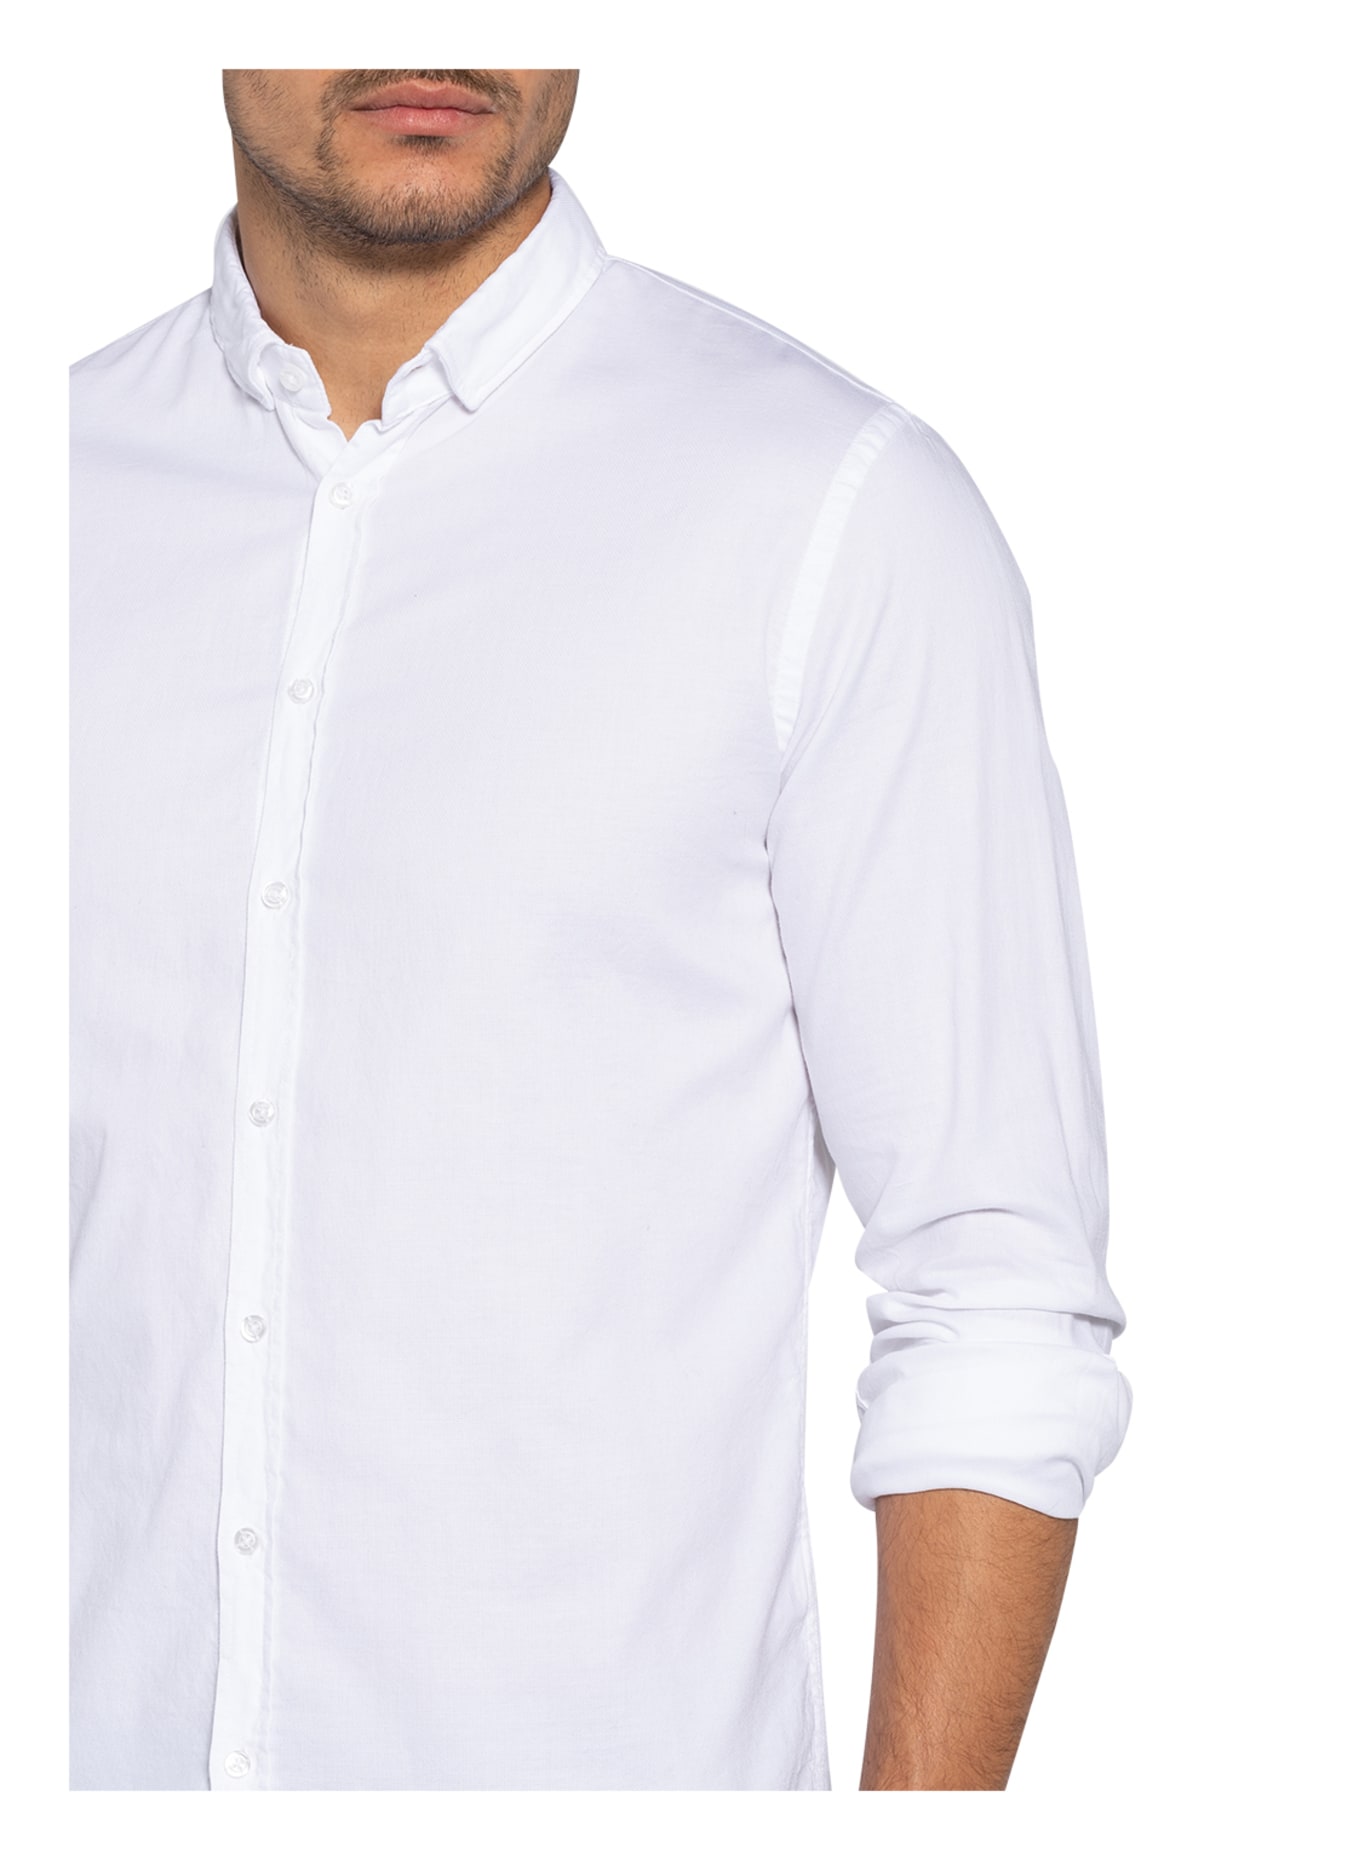 Q1 Manufaktur Hemd Extra Slim Fit, Farbe: WEISS (Bild 4)